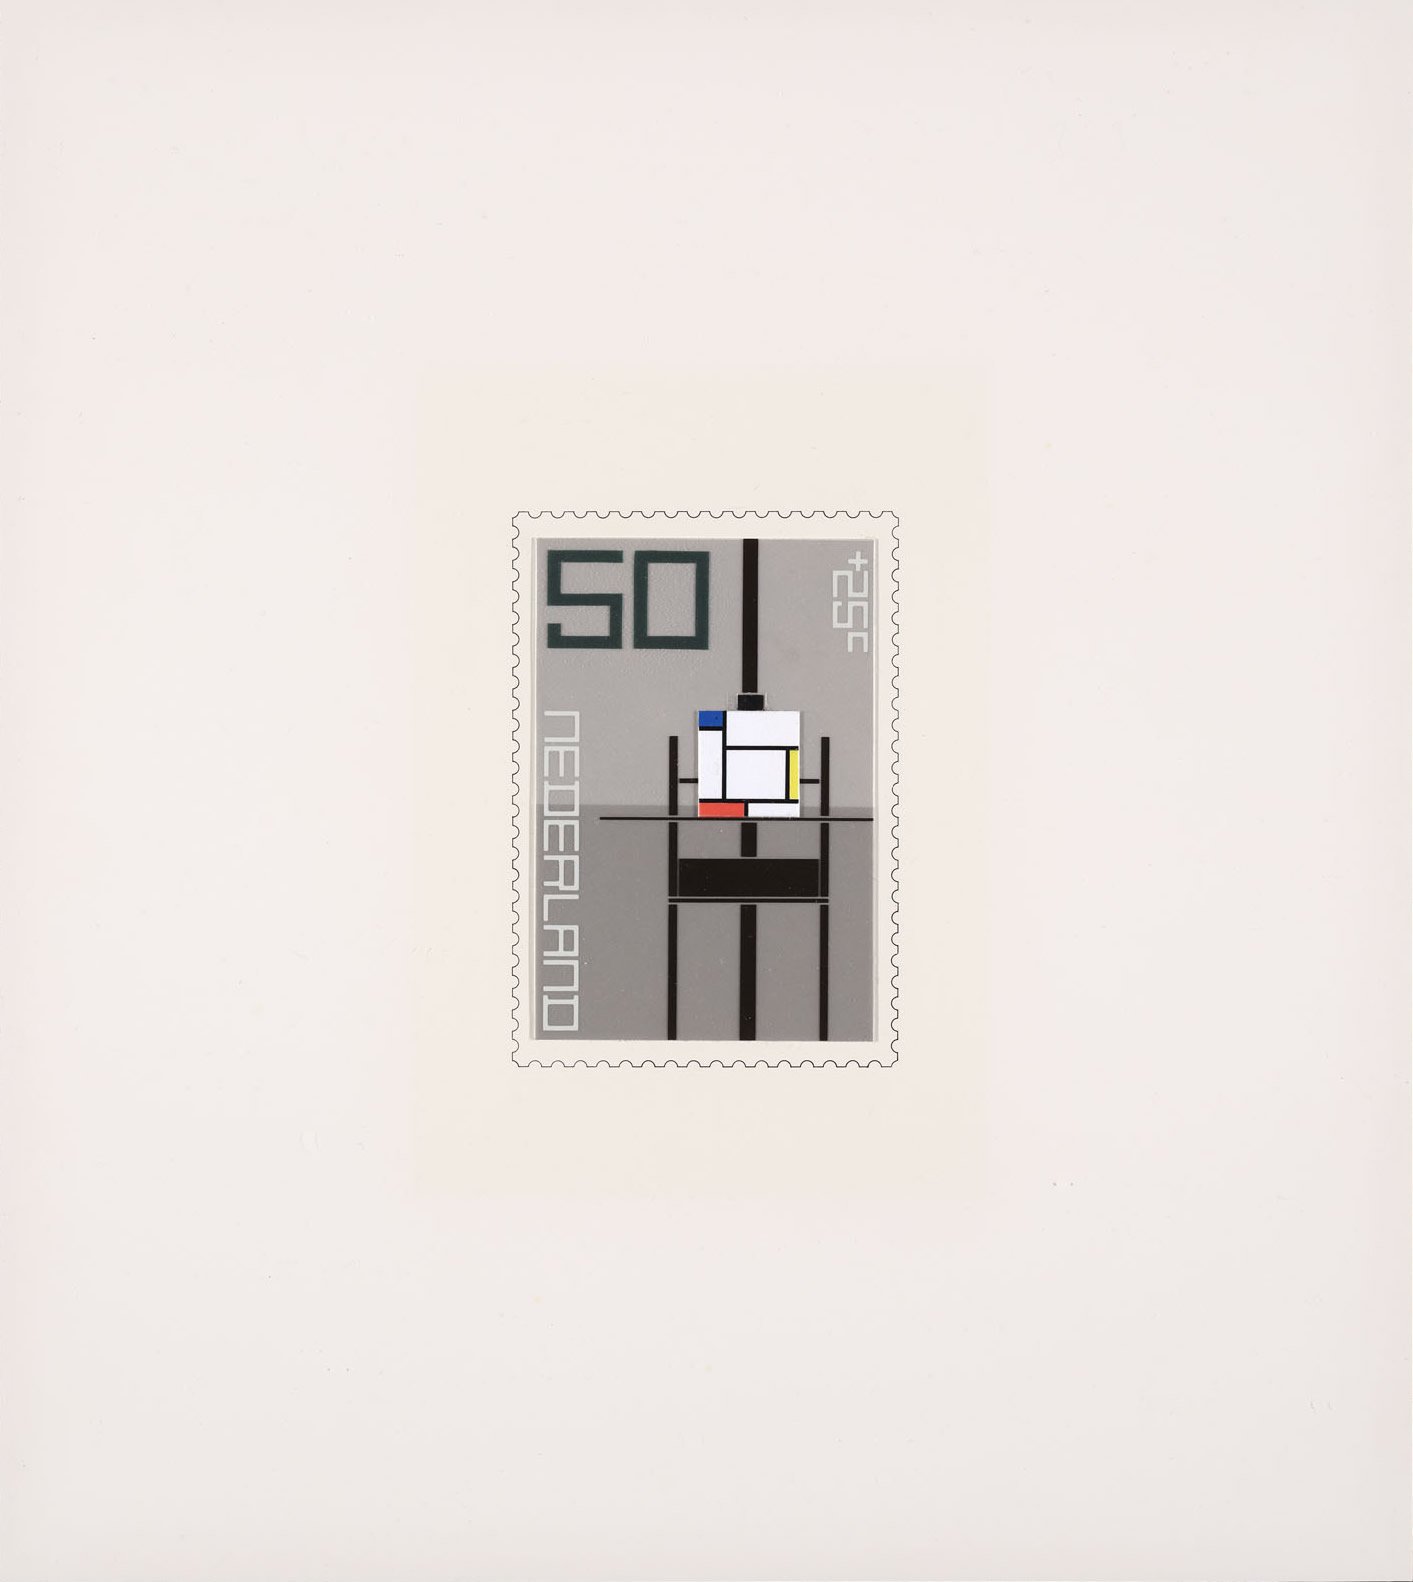 Wim Crouwel: First design for postage stamps The Netherlands 1983 De Stijl - painting: Mondriaan. 1982